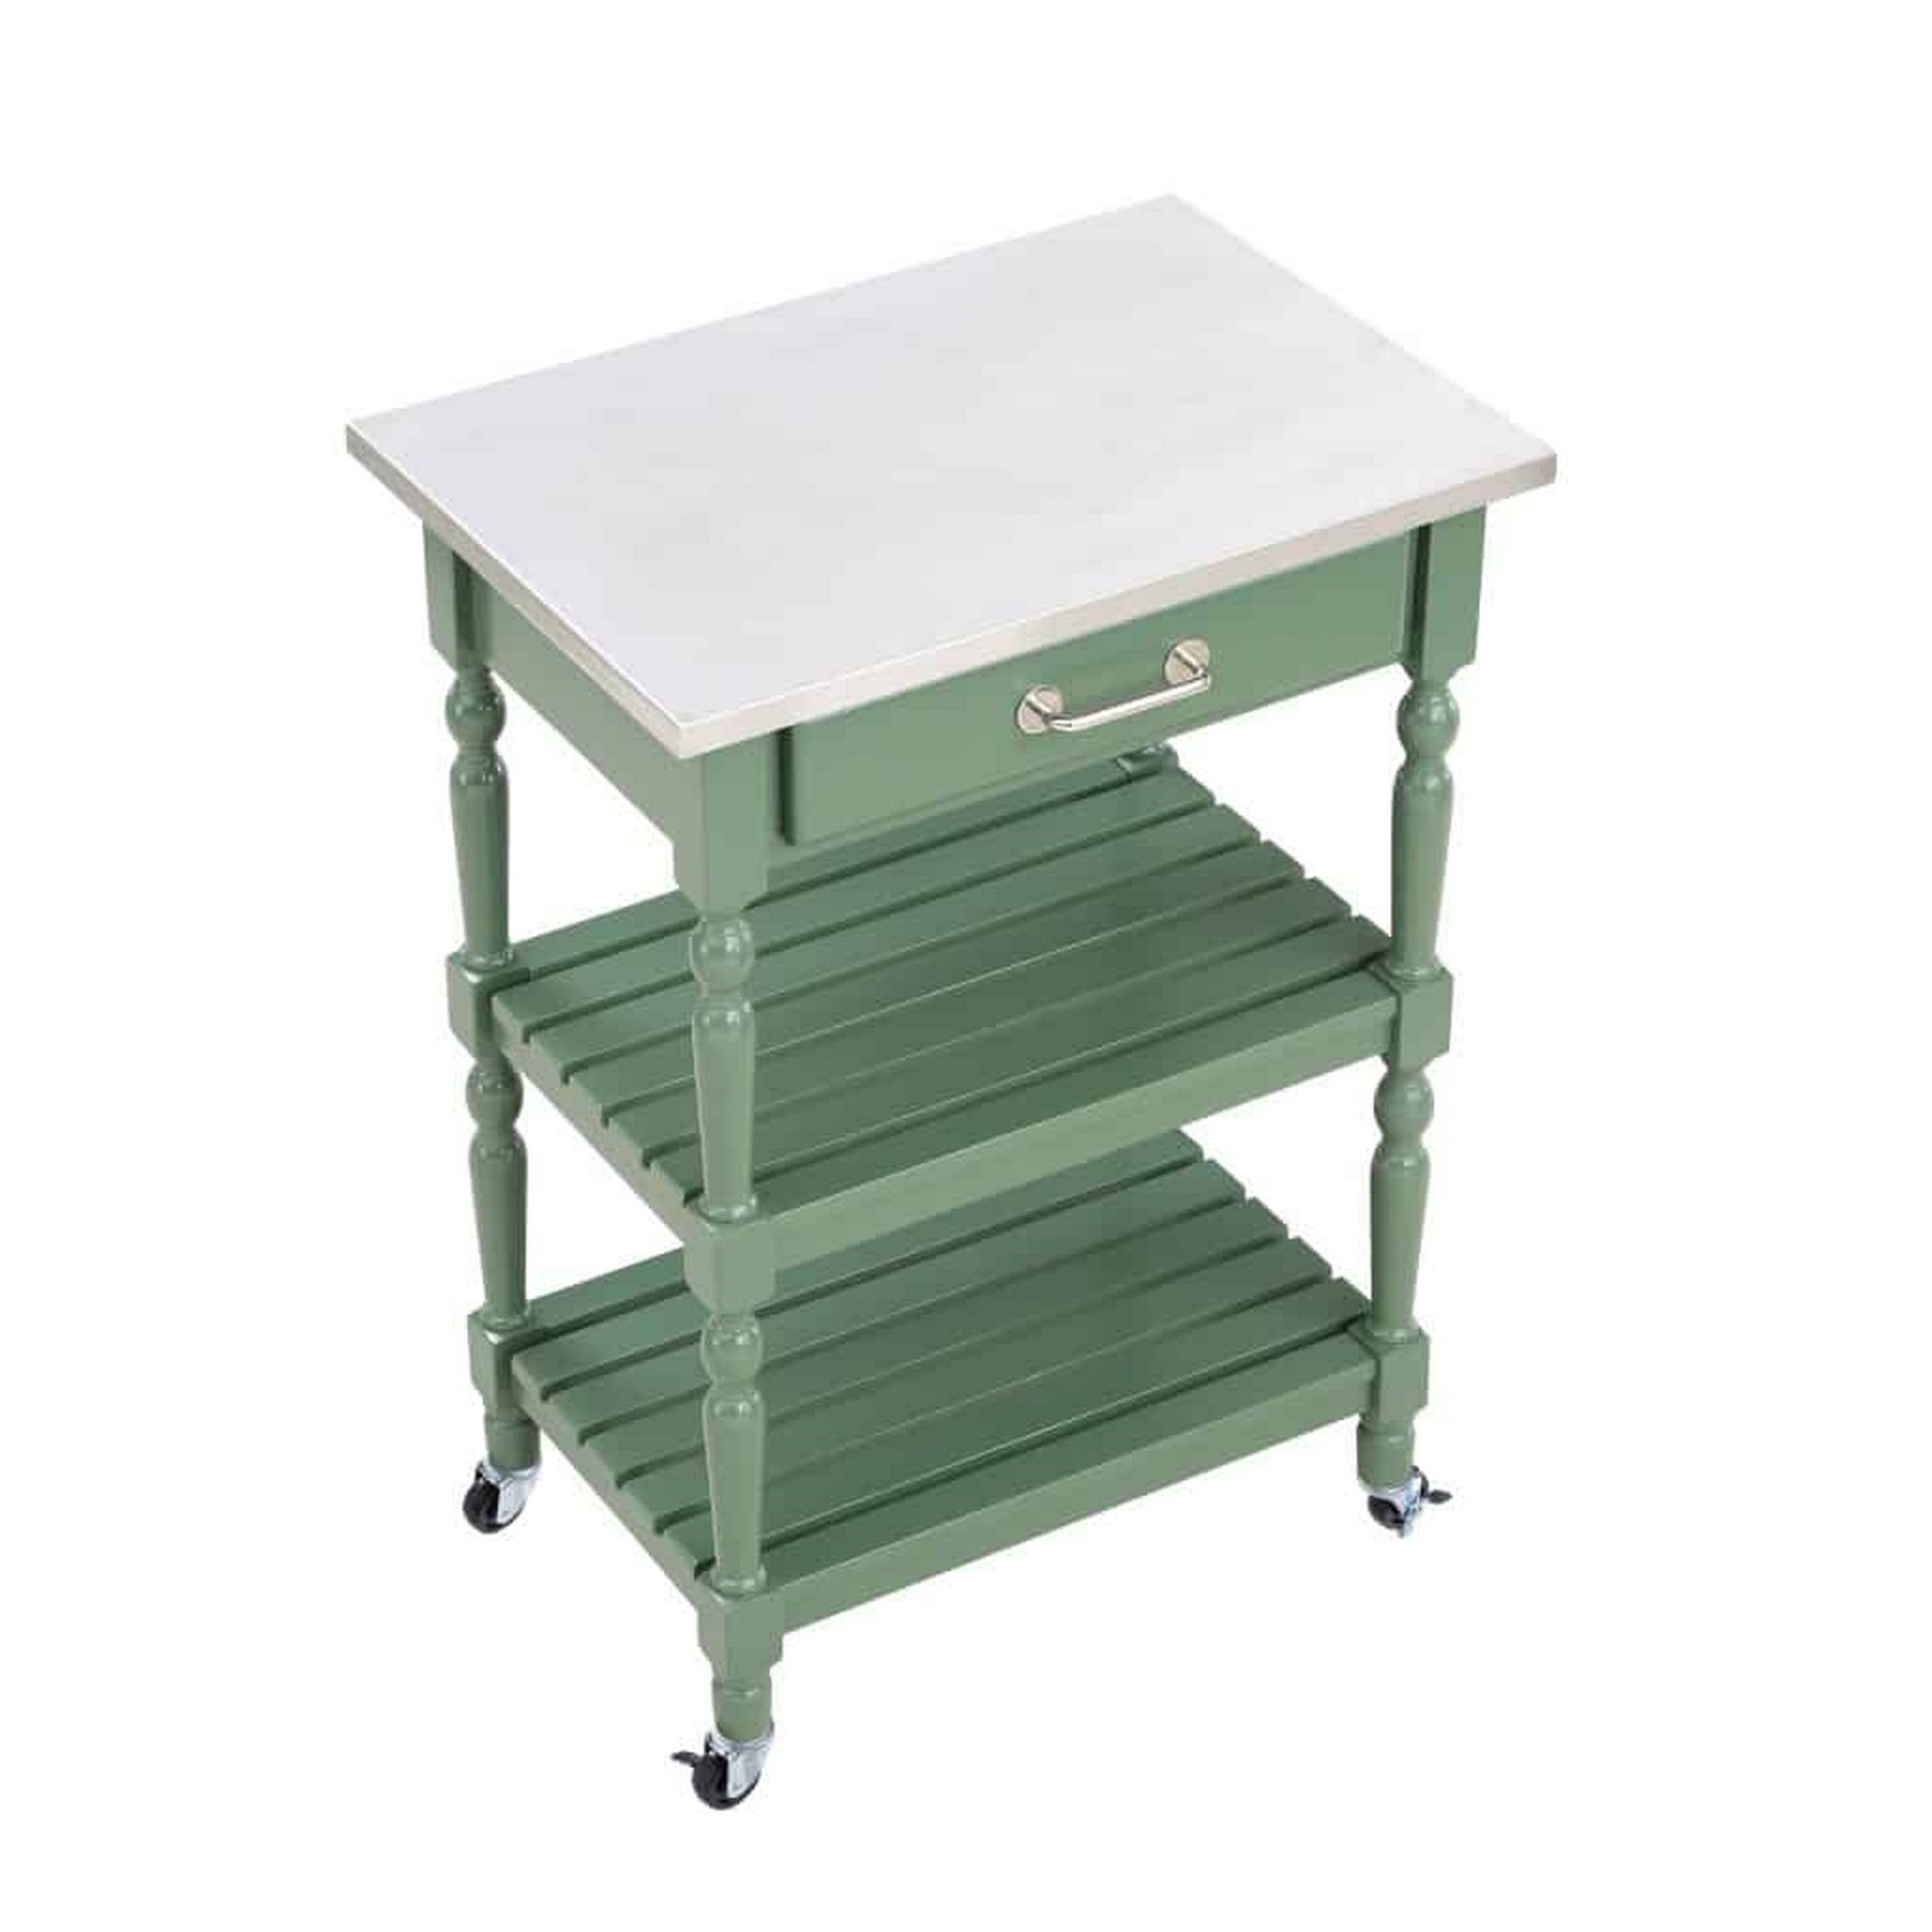 Irvin 33 Inch Kitchen Cart With Drawer And Shelves, Locking Wheels, Green - Saltoro Sherpi